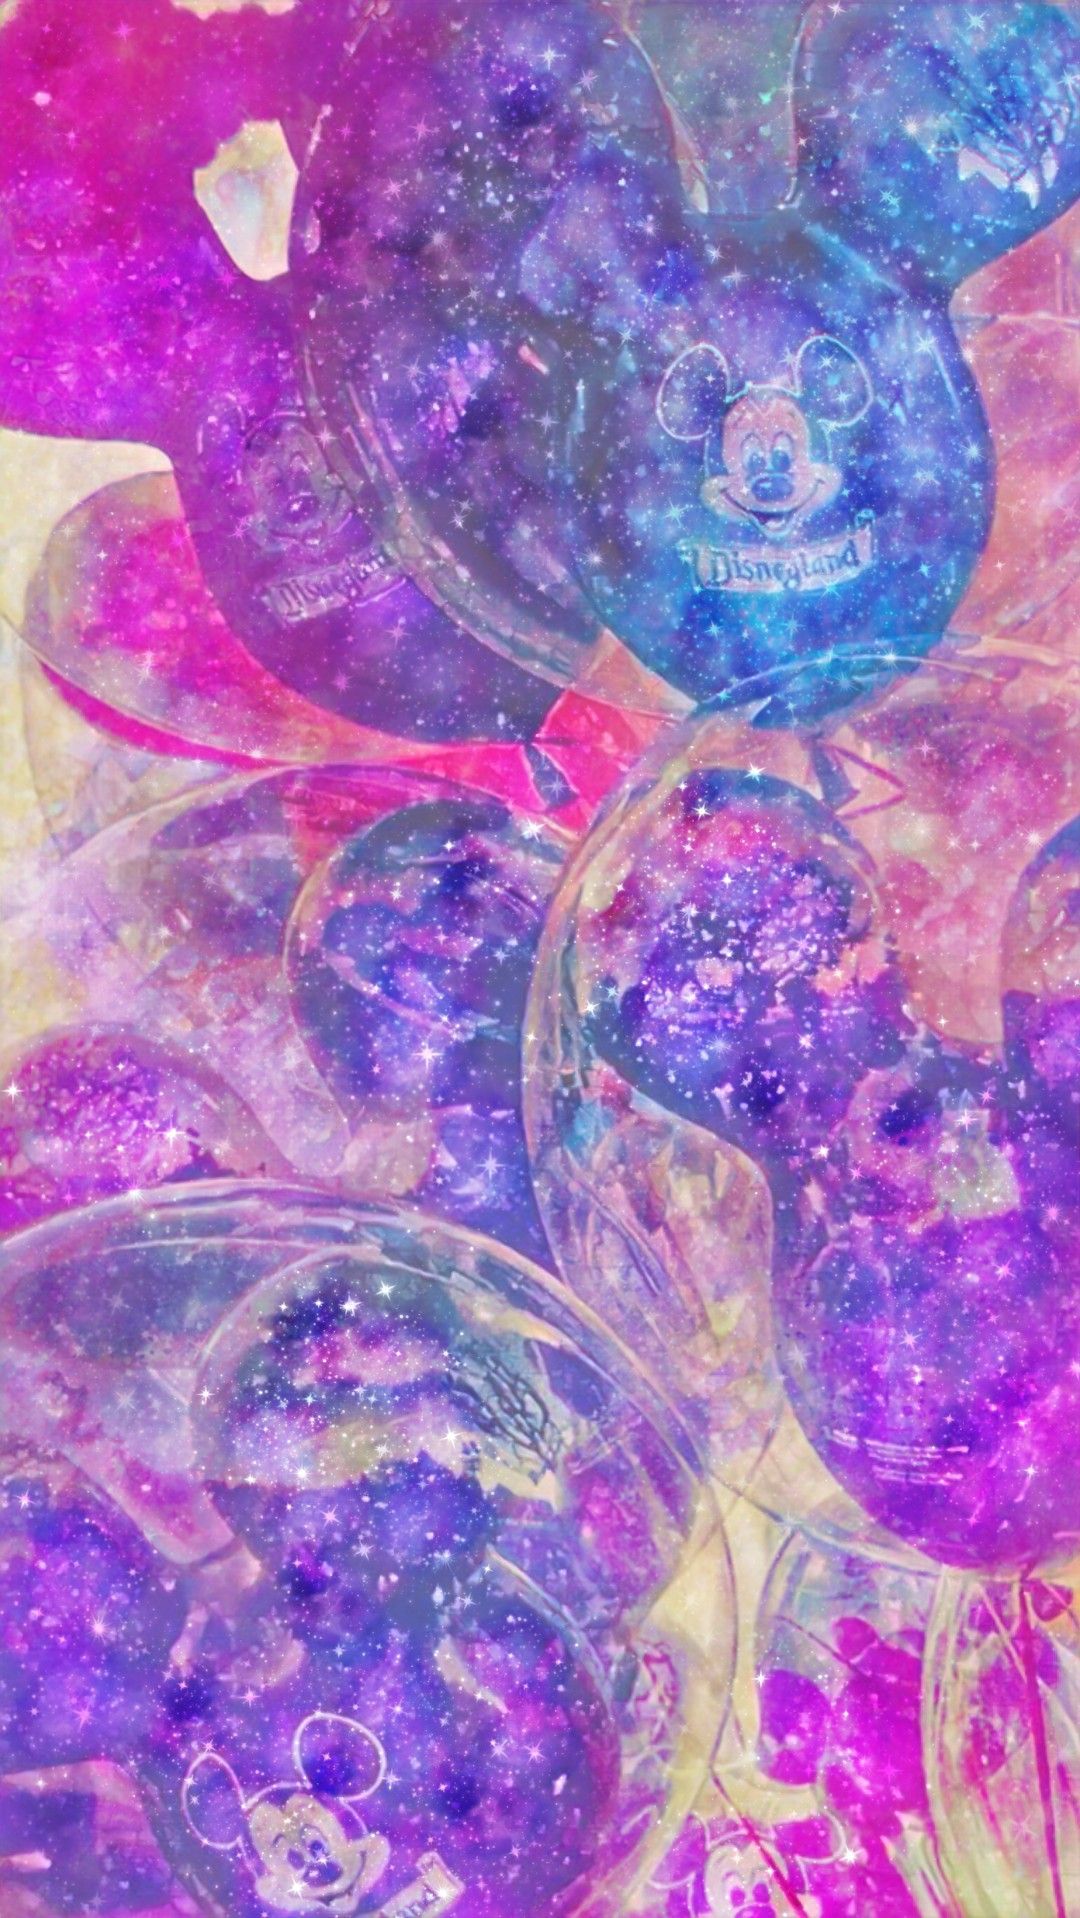 Glitter Balloon Wallpapers